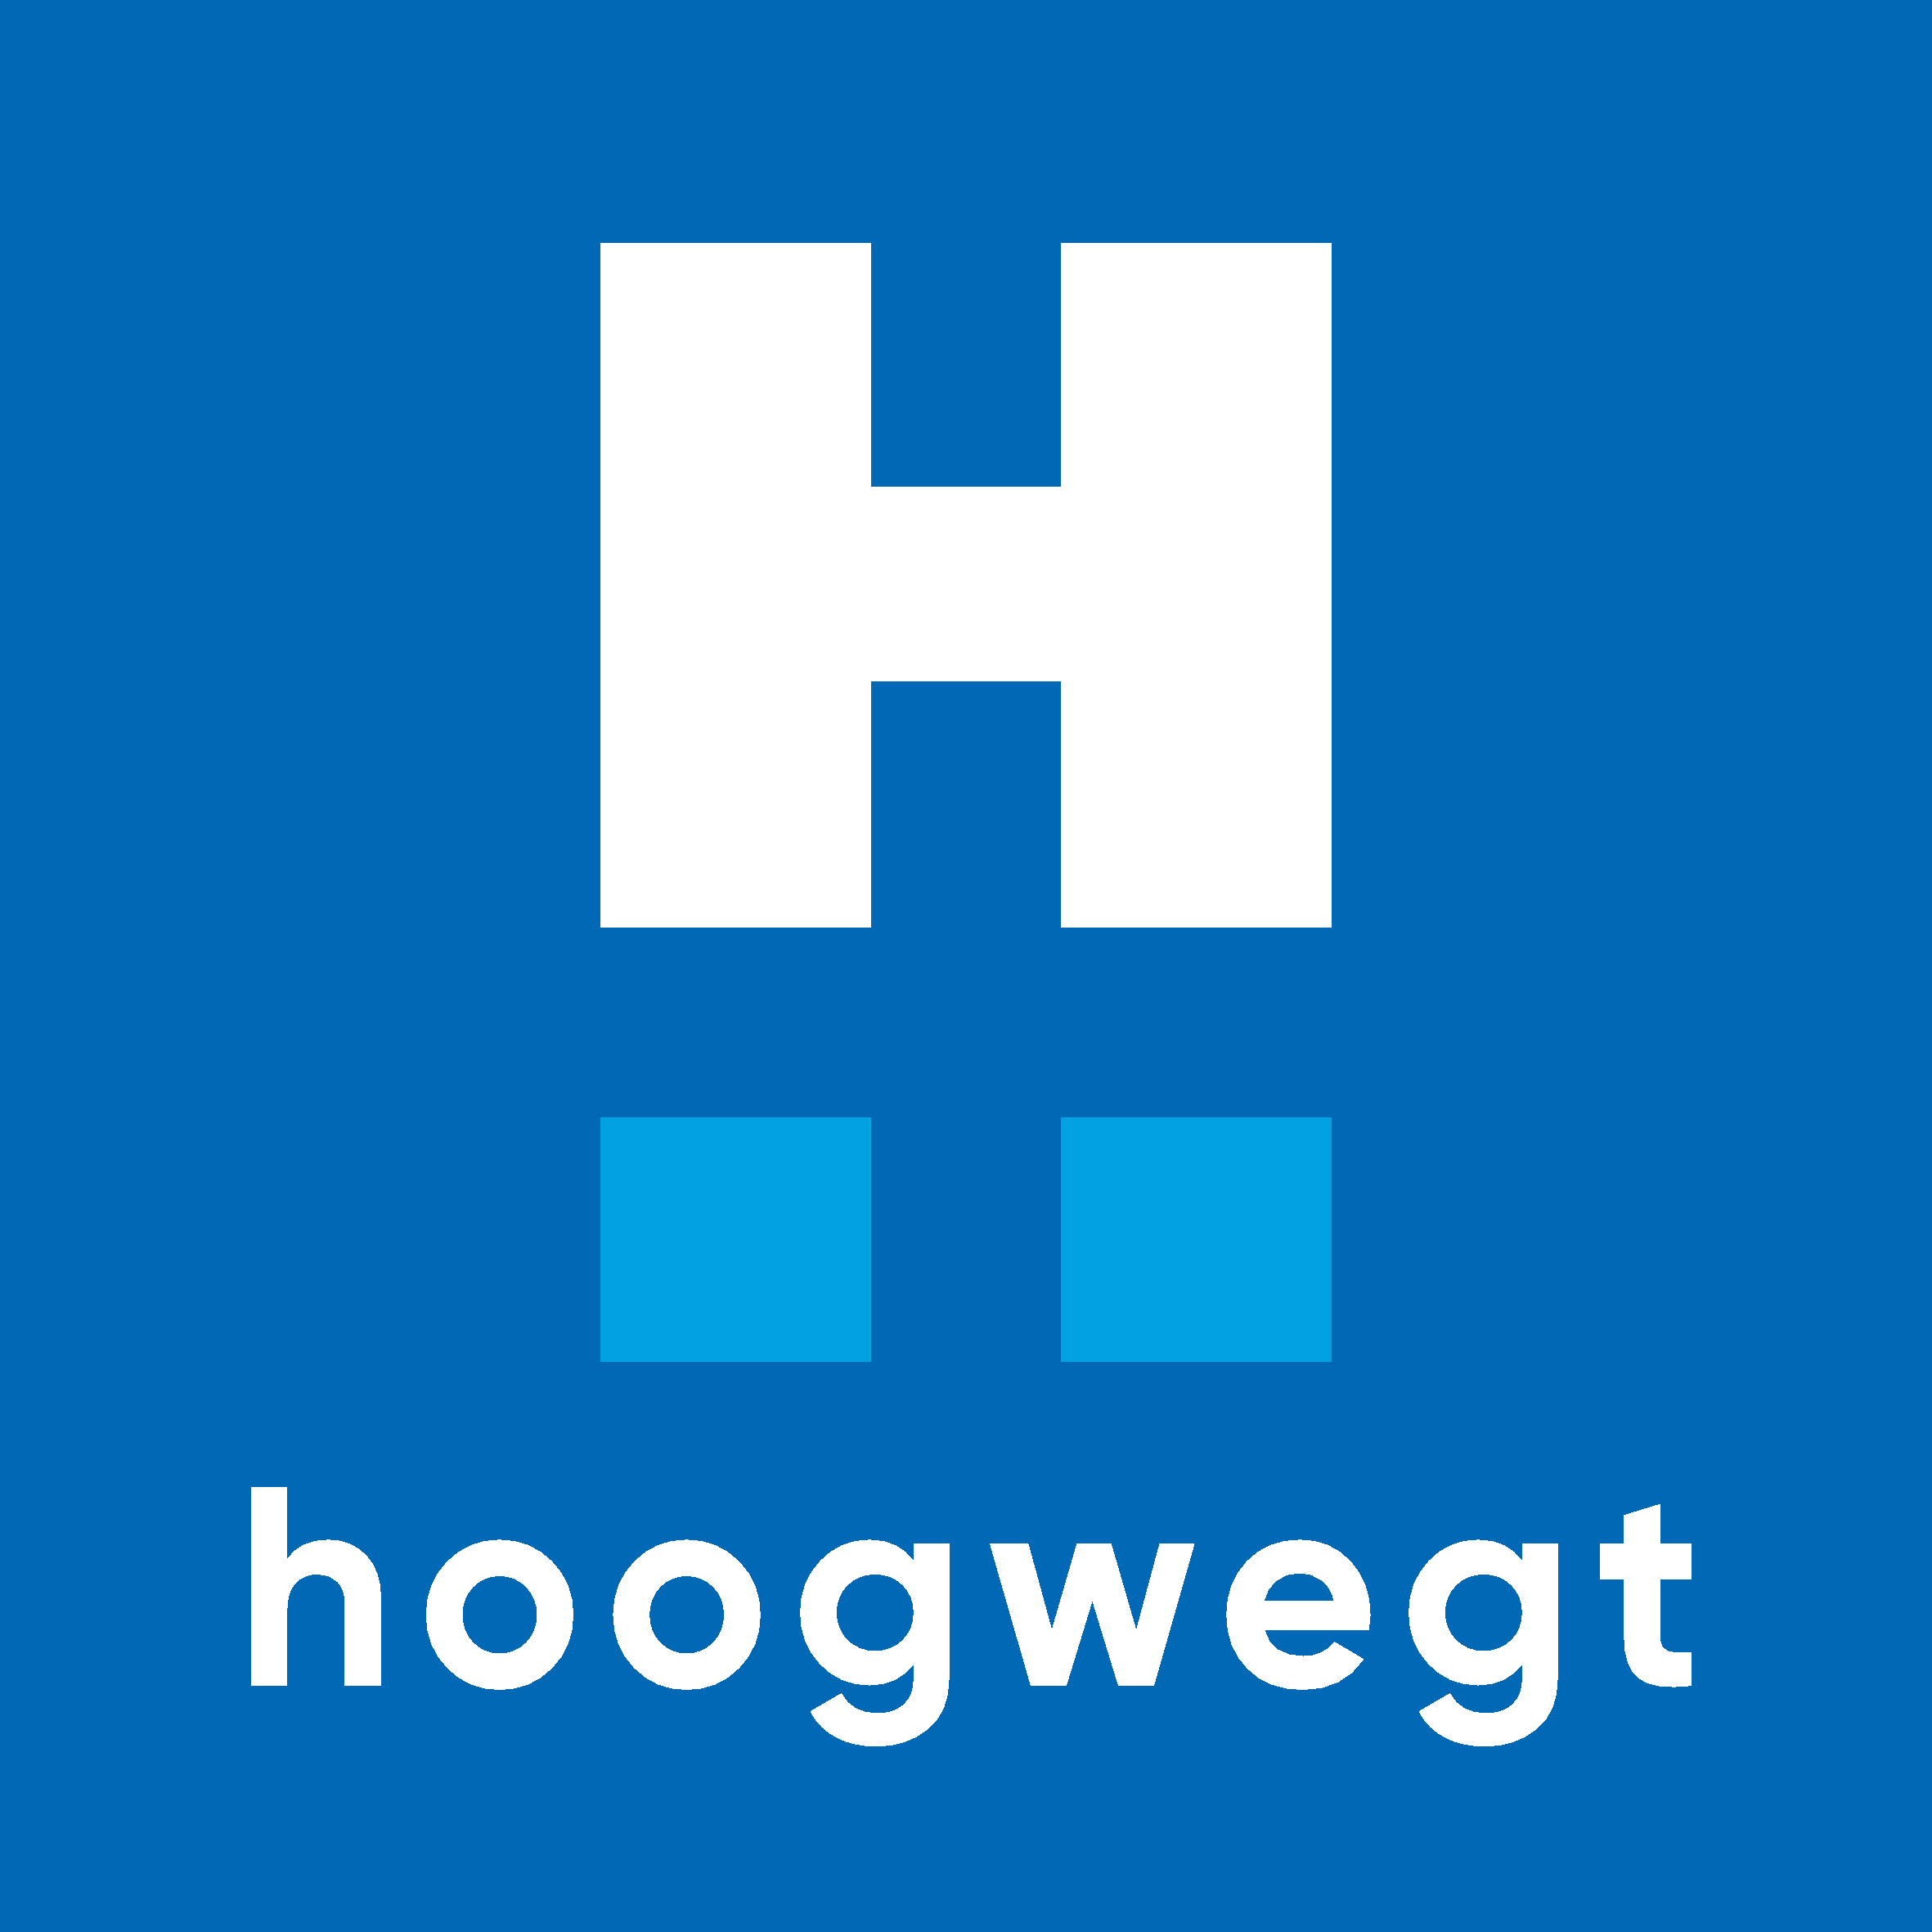 Hoogwegt Group